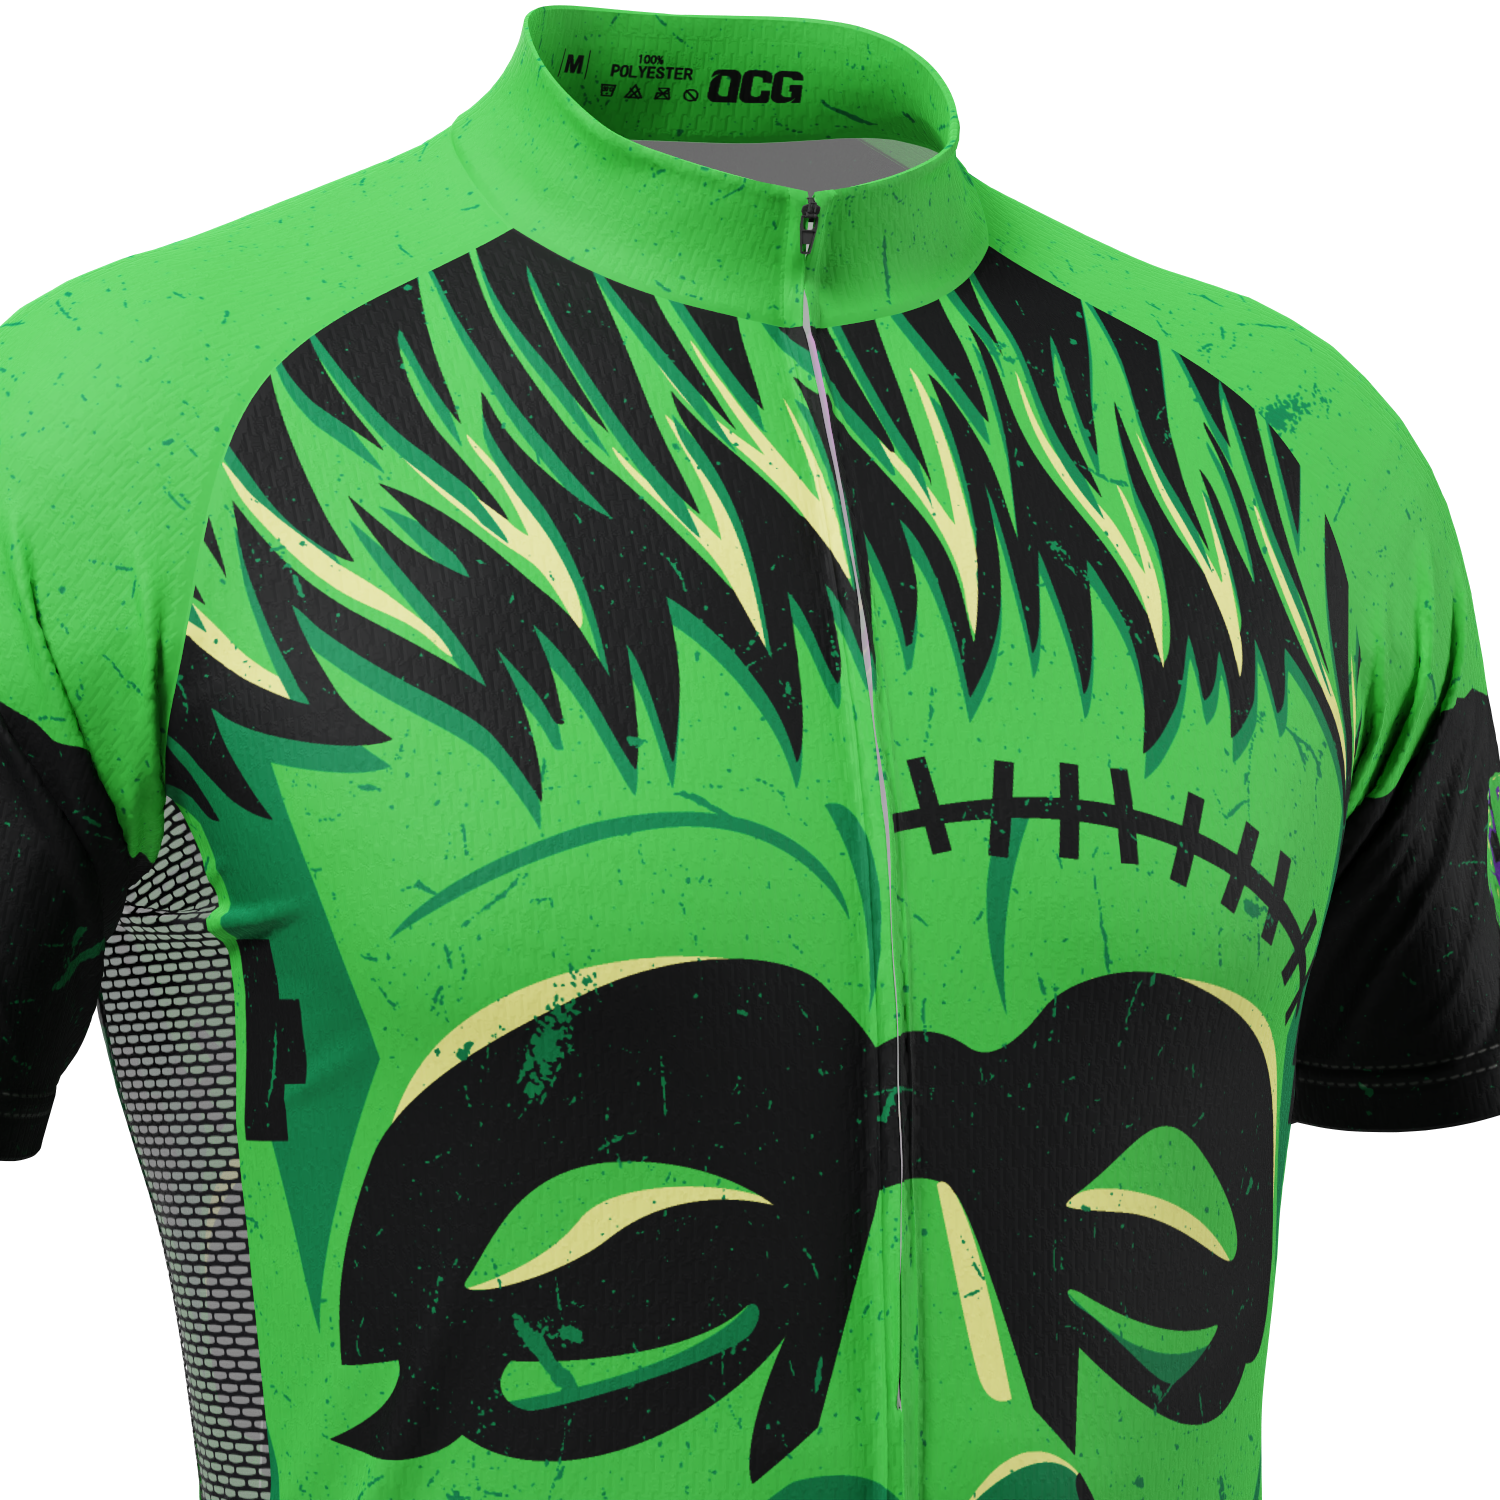 Men's Frankenstein On Wheels Short Sleeve Cycling Jersey